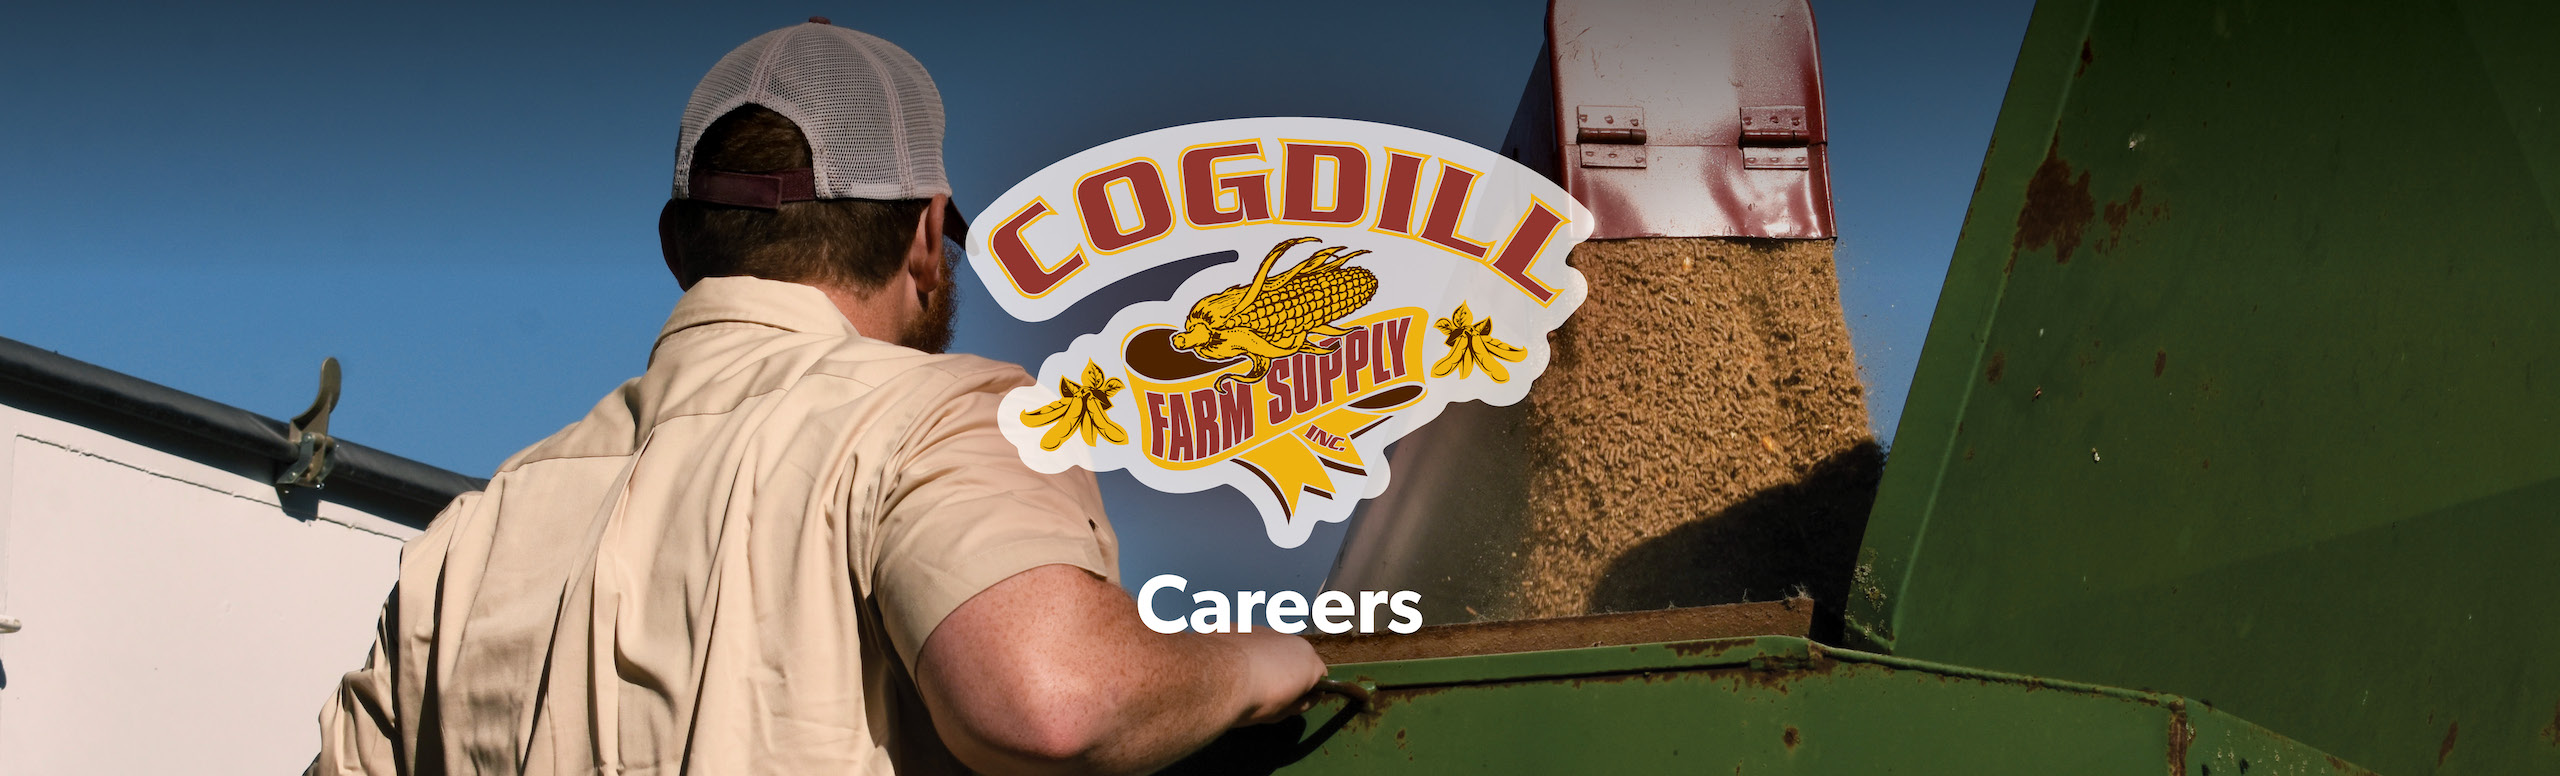 Cogdill Farm Supply Careers